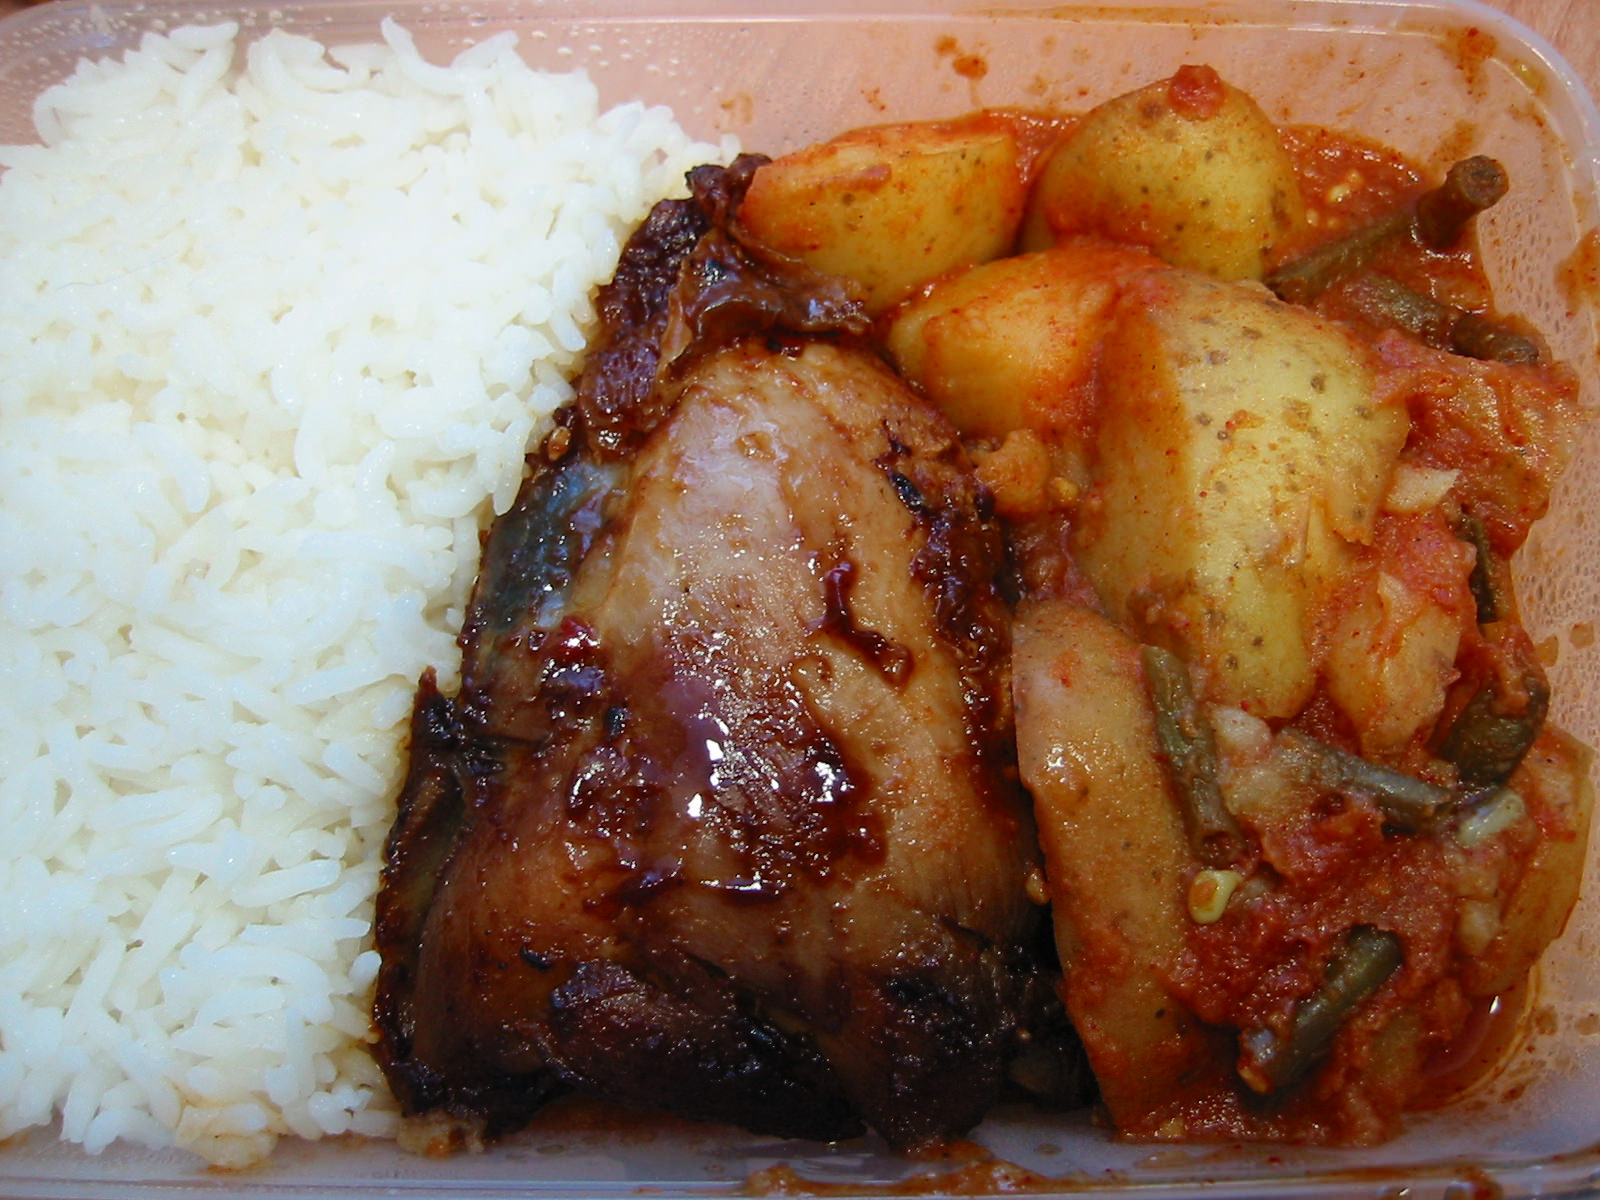 Ayam kicap, potatoes and beans with rice